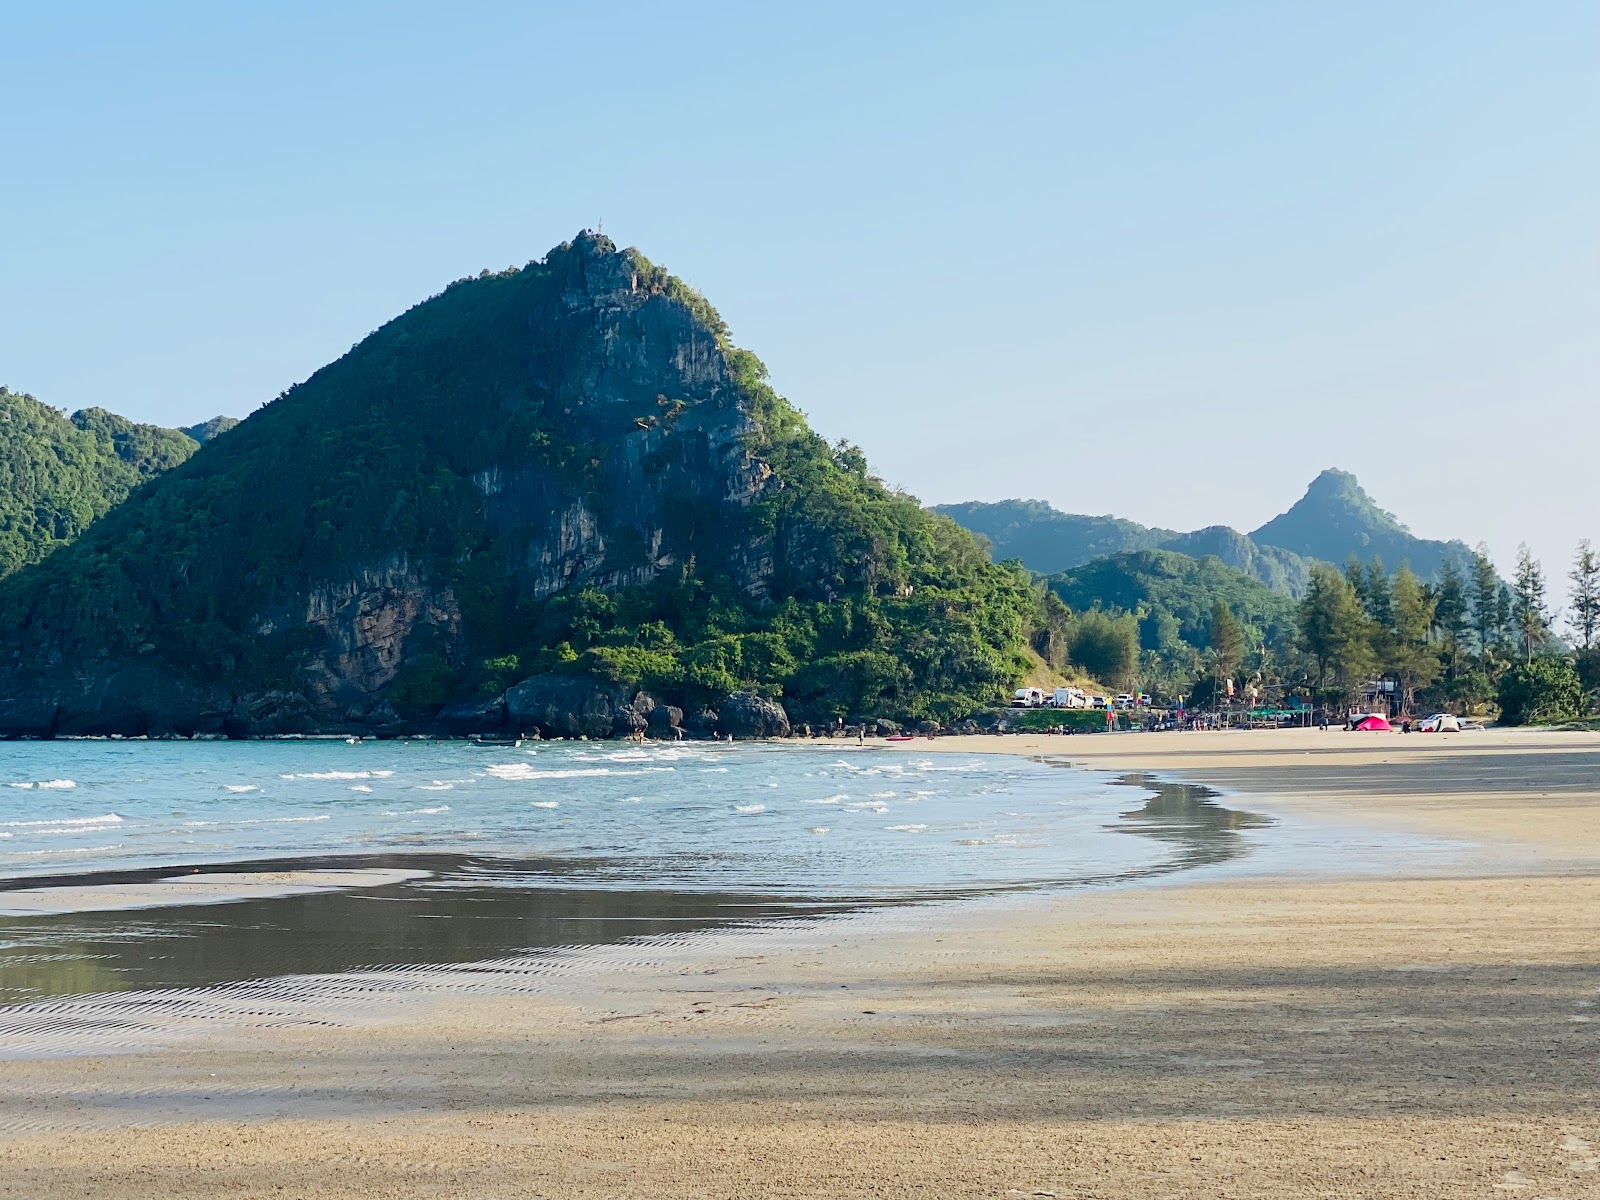 Foto di Thung Yang Beach ubicato in zona naturale